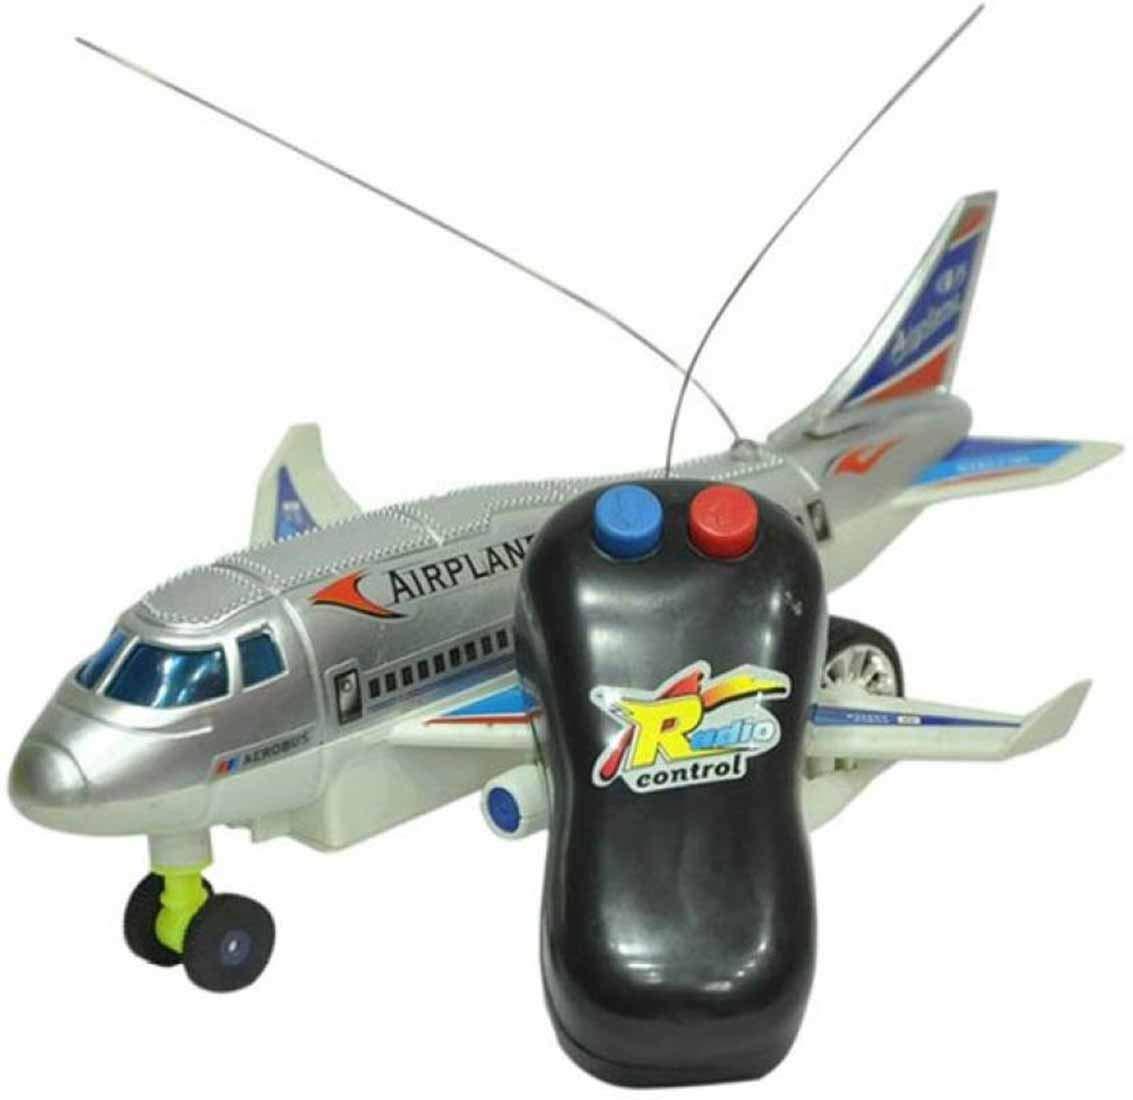 Remote Control Aeroplane Toy Price: Factors Affecting Remote Control Aeroplane Toy Prices